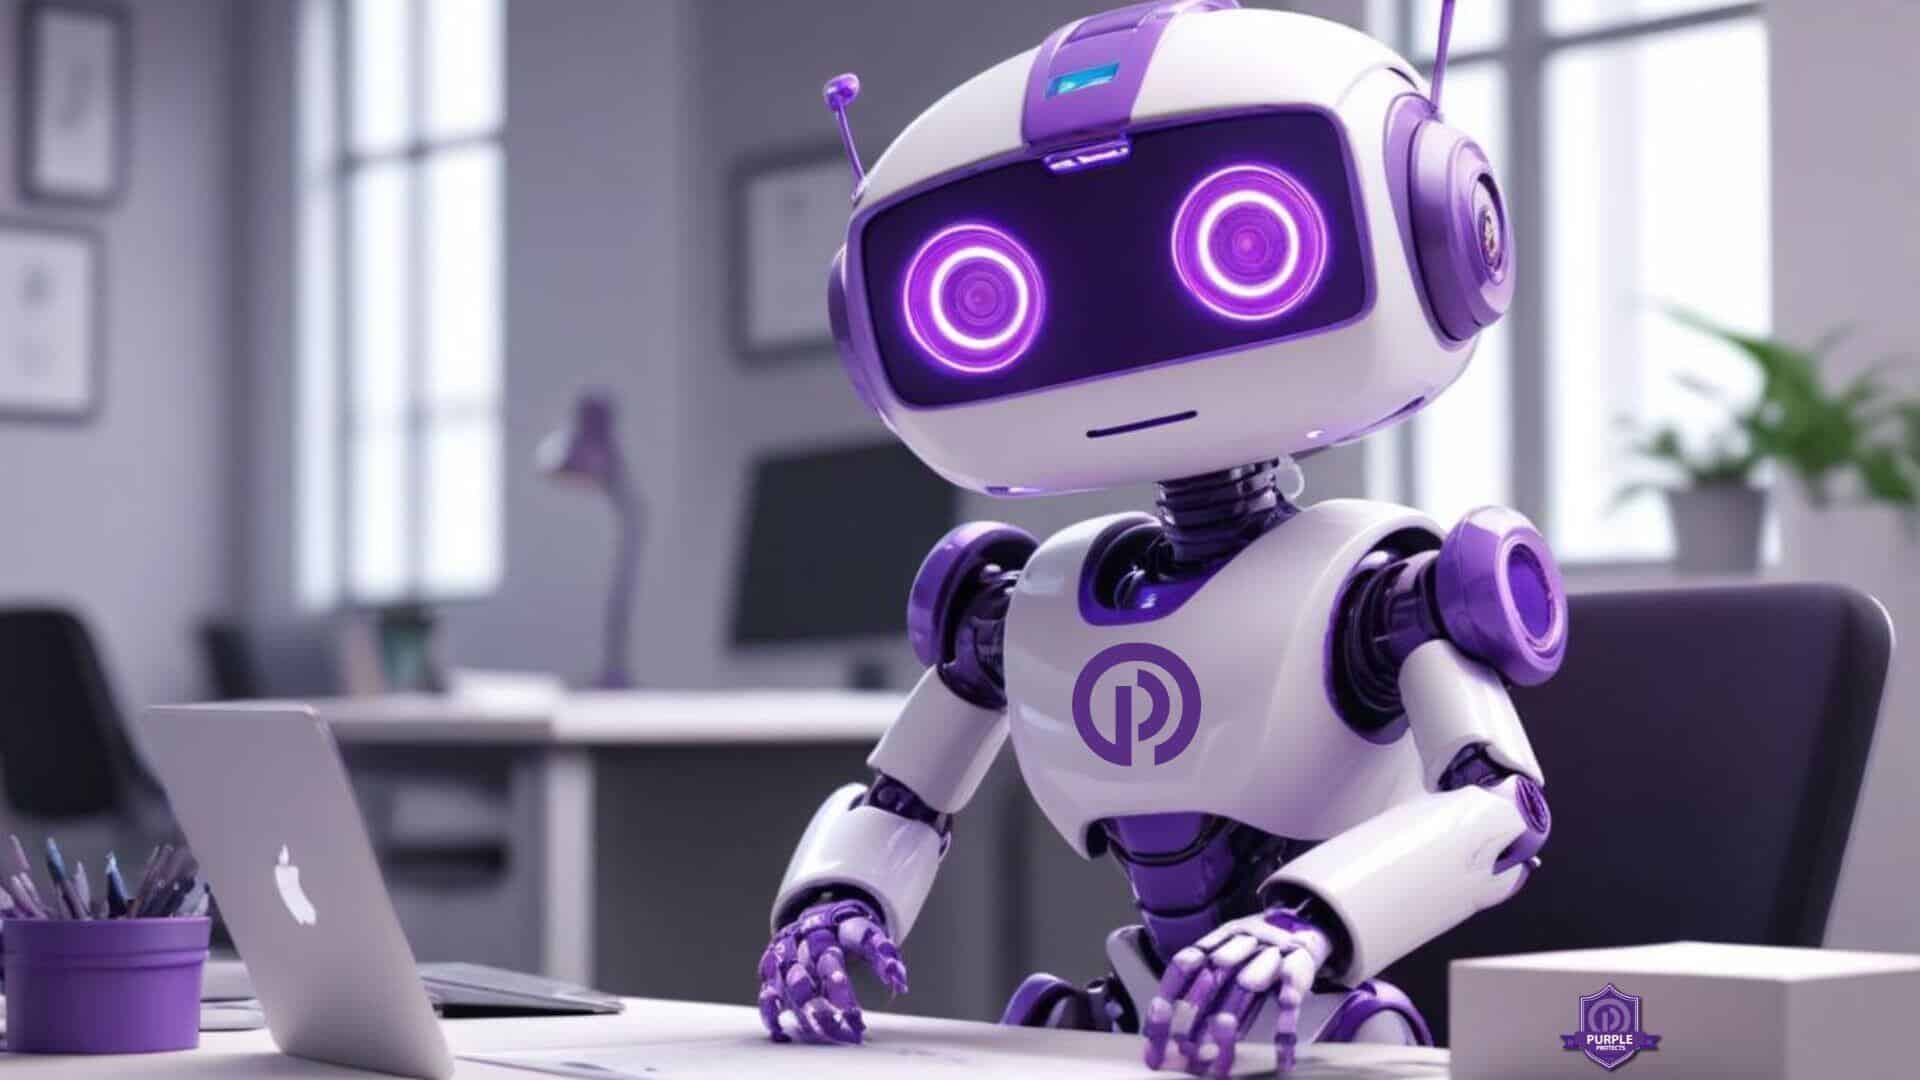 The Purple Guys AI Bot